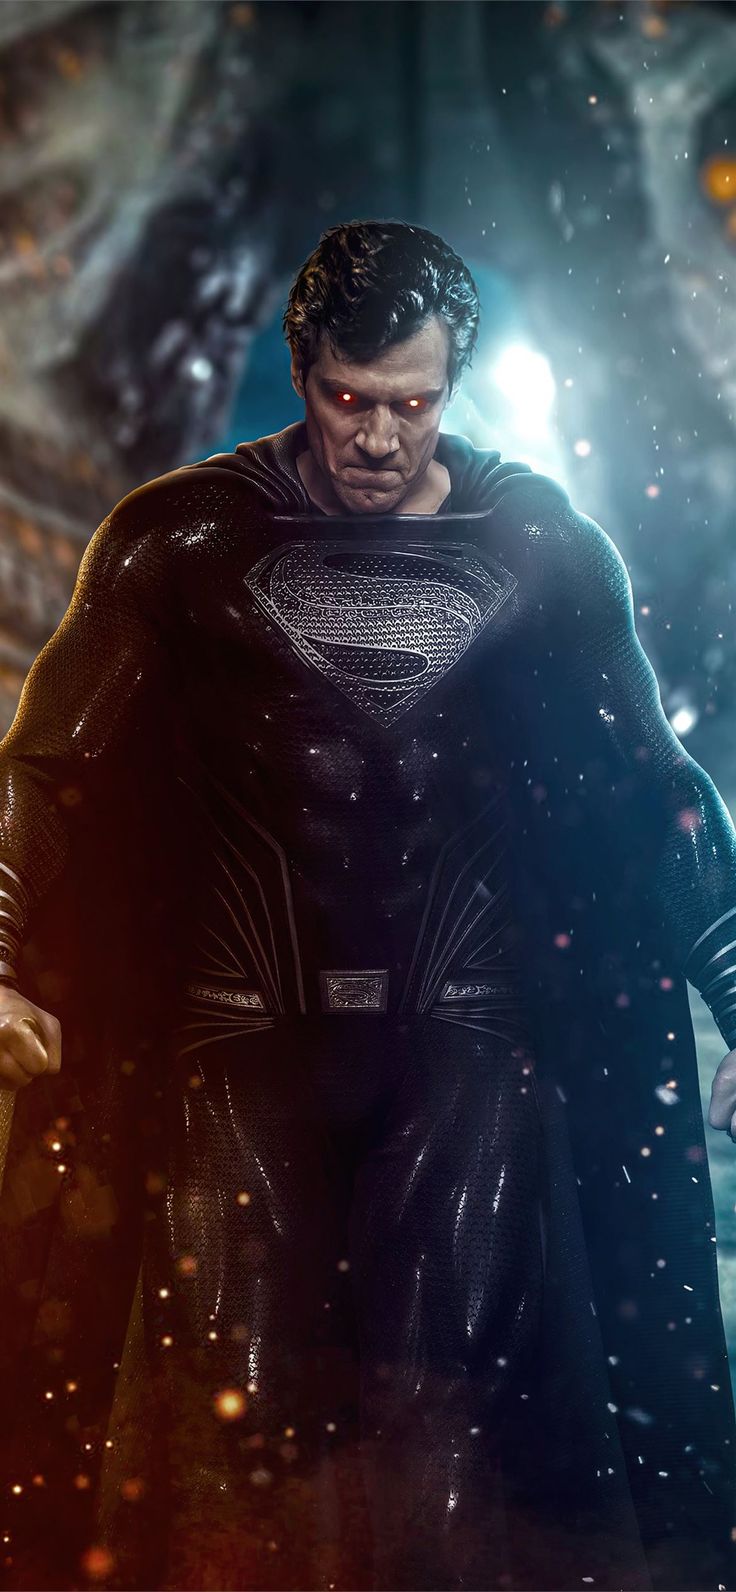 justice league superman black suit 4k #JusticeLeague #superman Movies # movies k #Artstation #artist. Superman black suit, Black superman, Superman